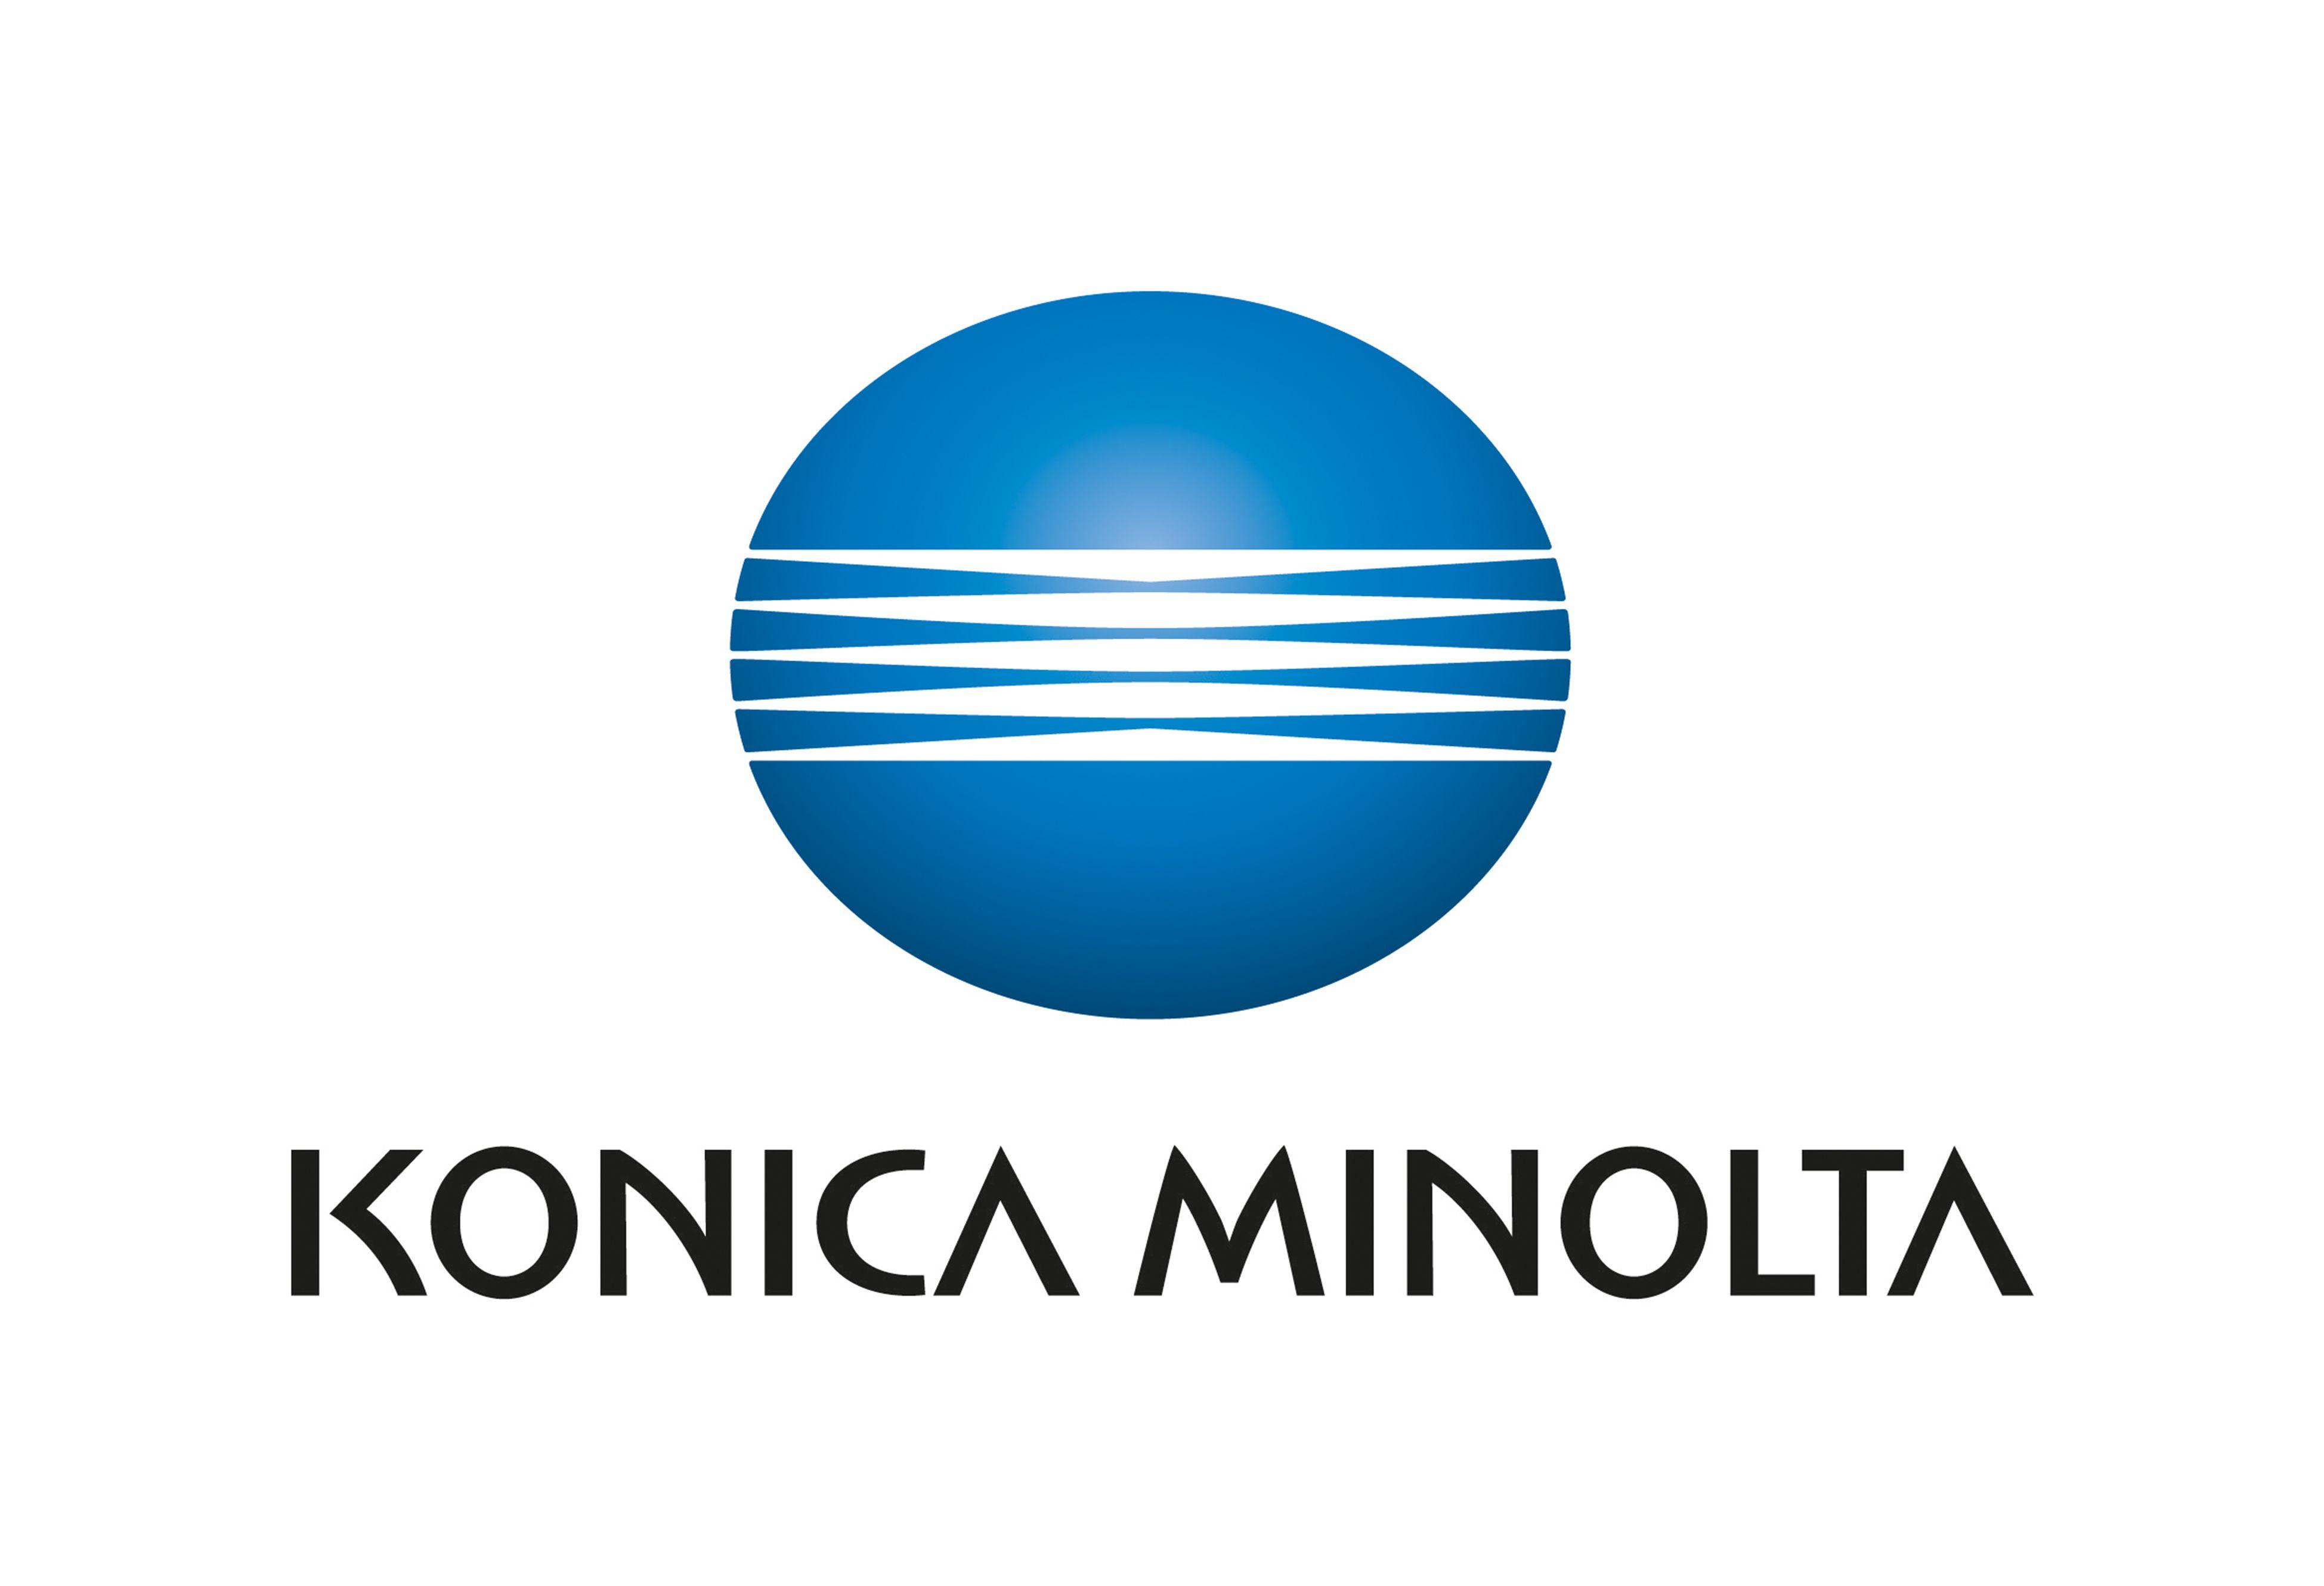 Bizhub Logo - Konica Minolta Announces Digital Workhorse bizhub PRO 1100 | MENAFN.COM